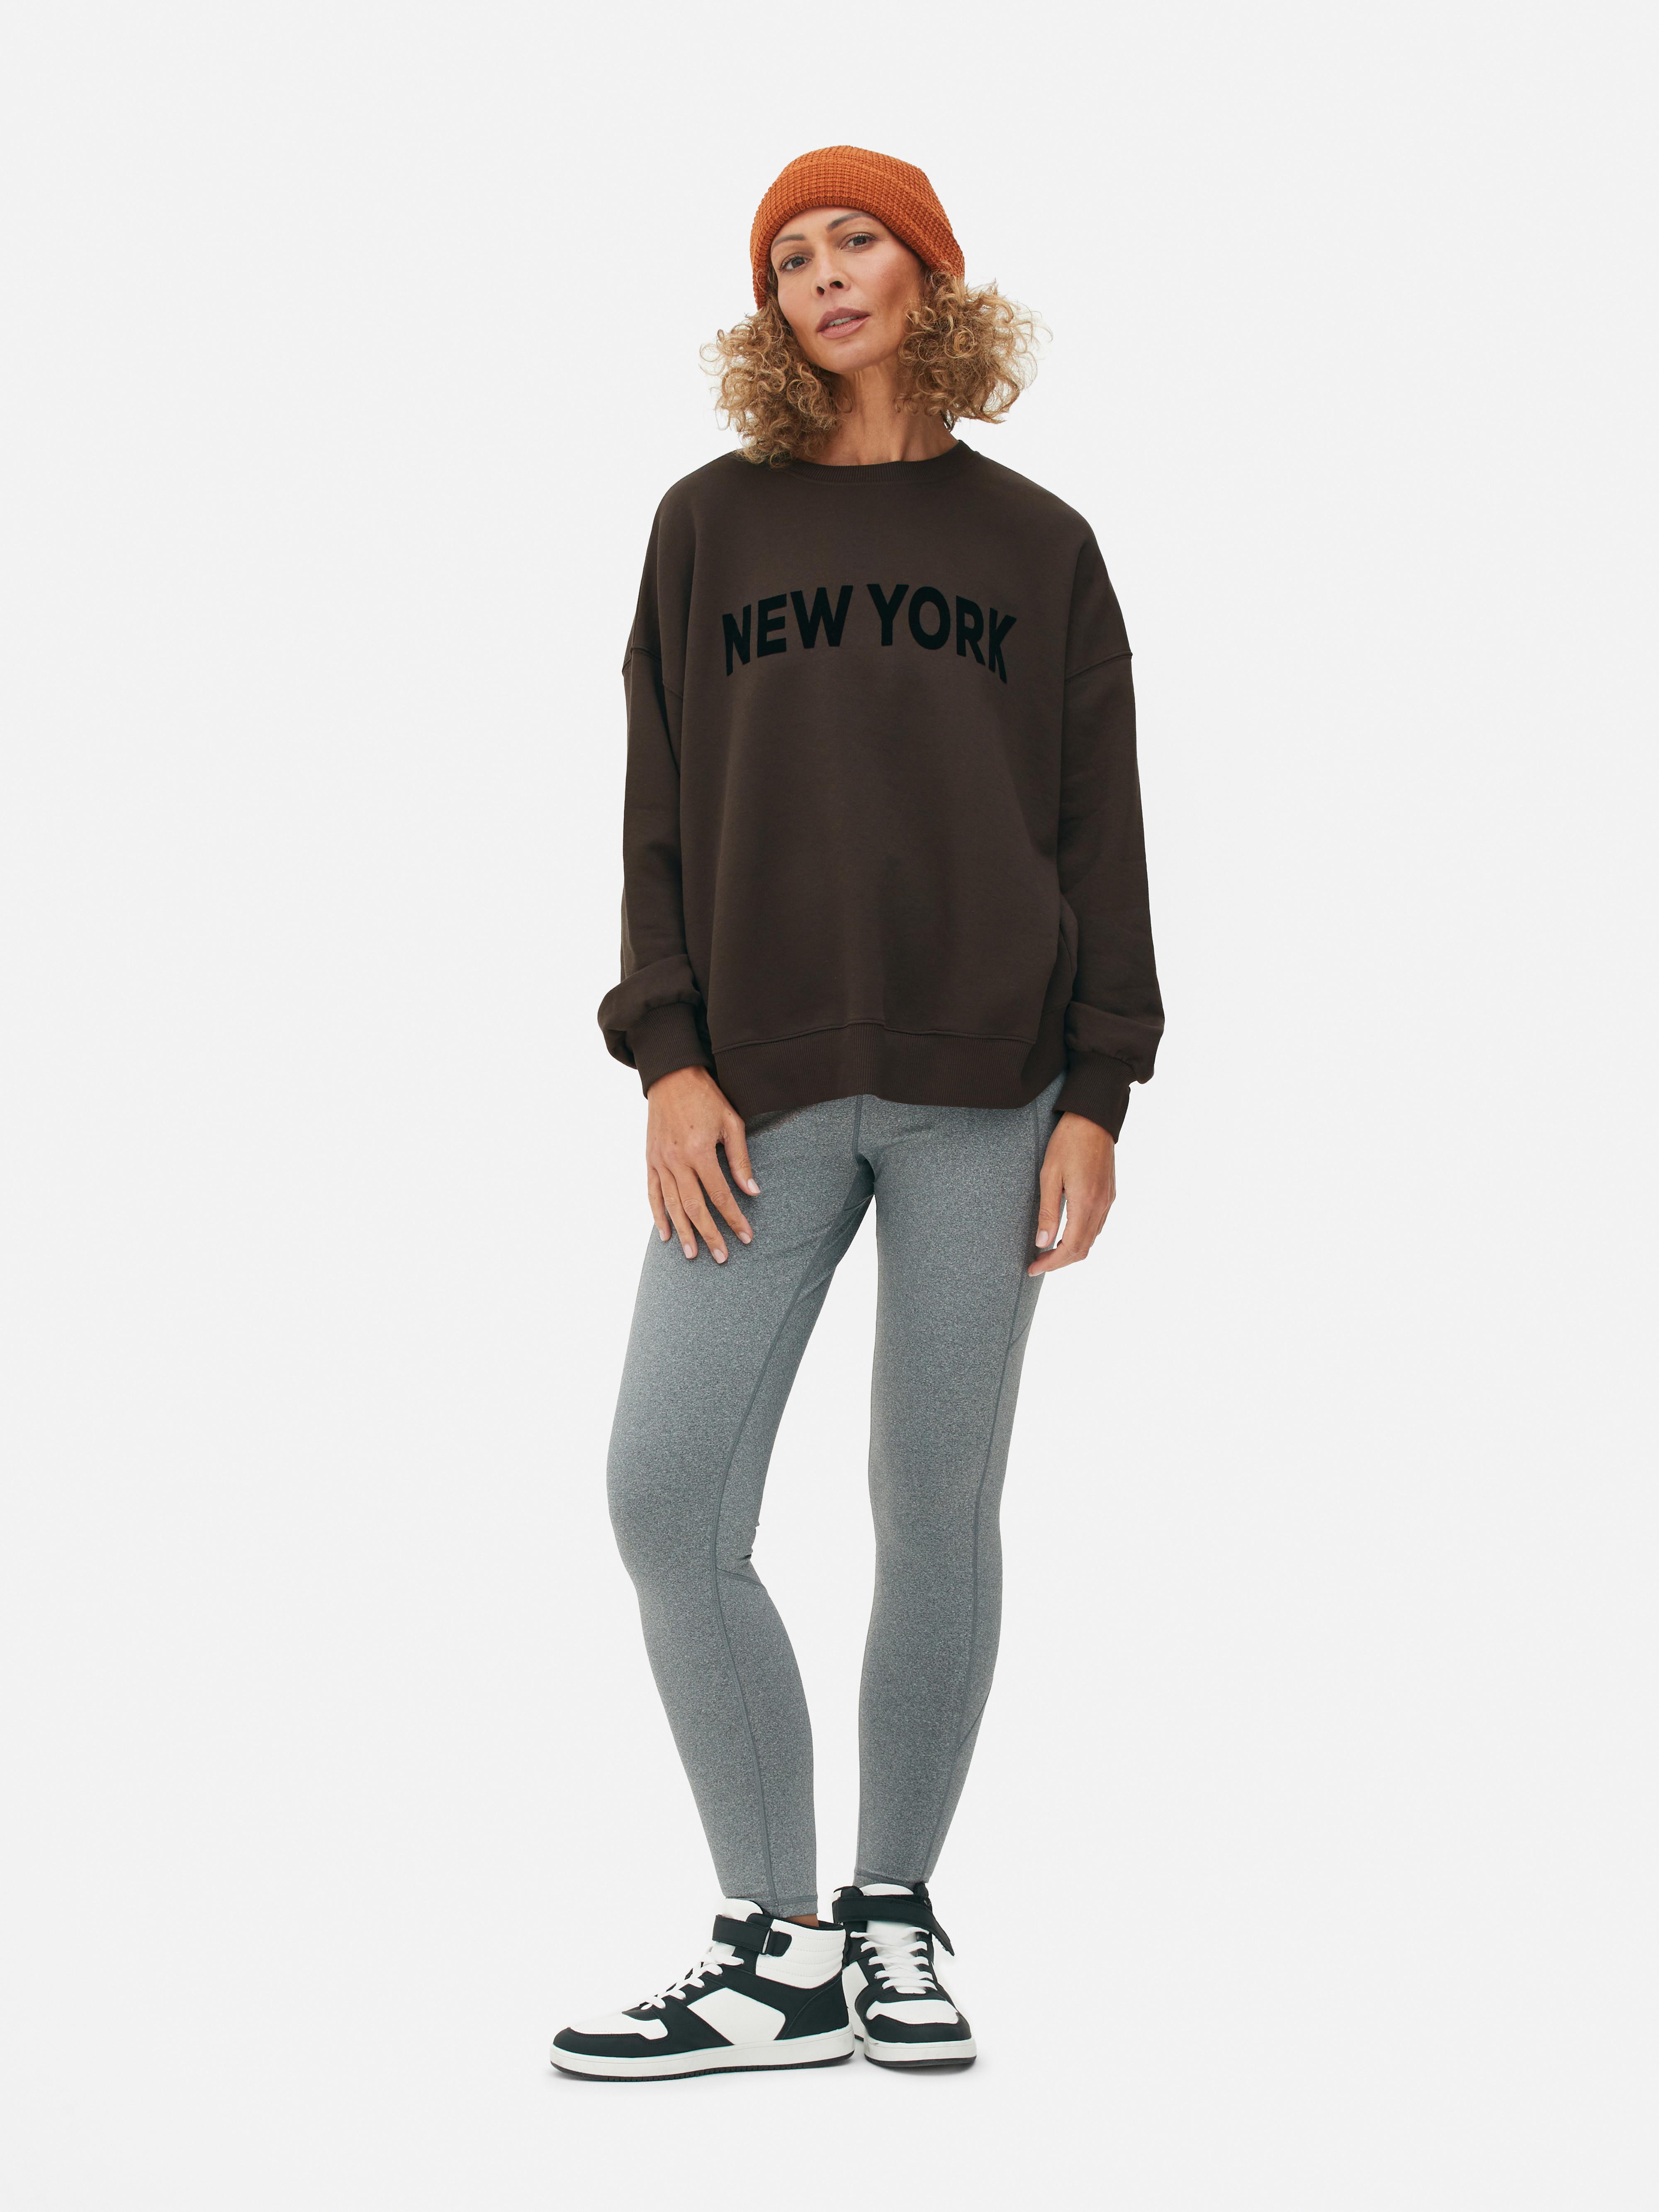 Velvet New York Sweatshirt